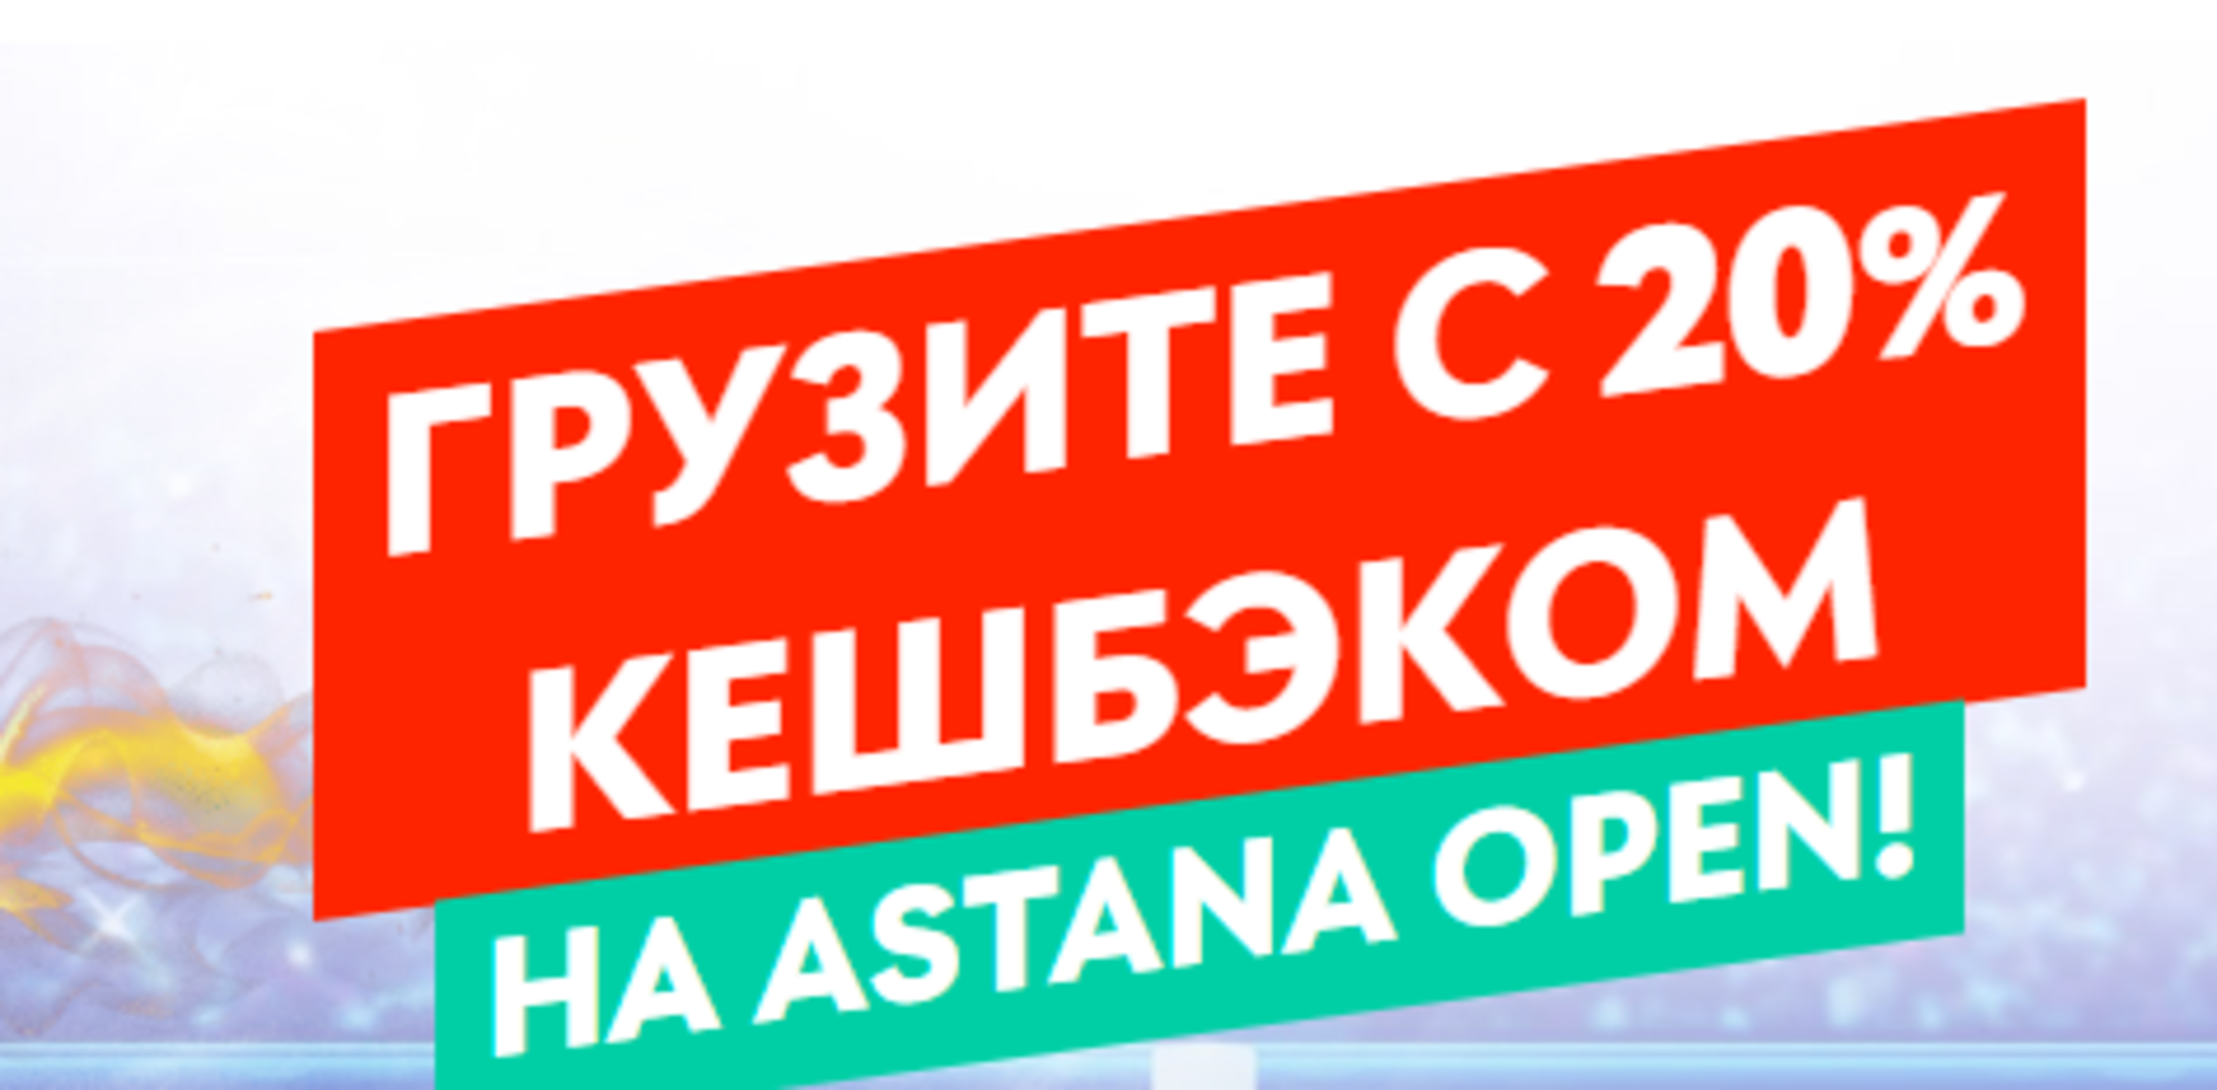 Pin-Up.kz предлагает кэшбэк 20% за ставки на Astana Open